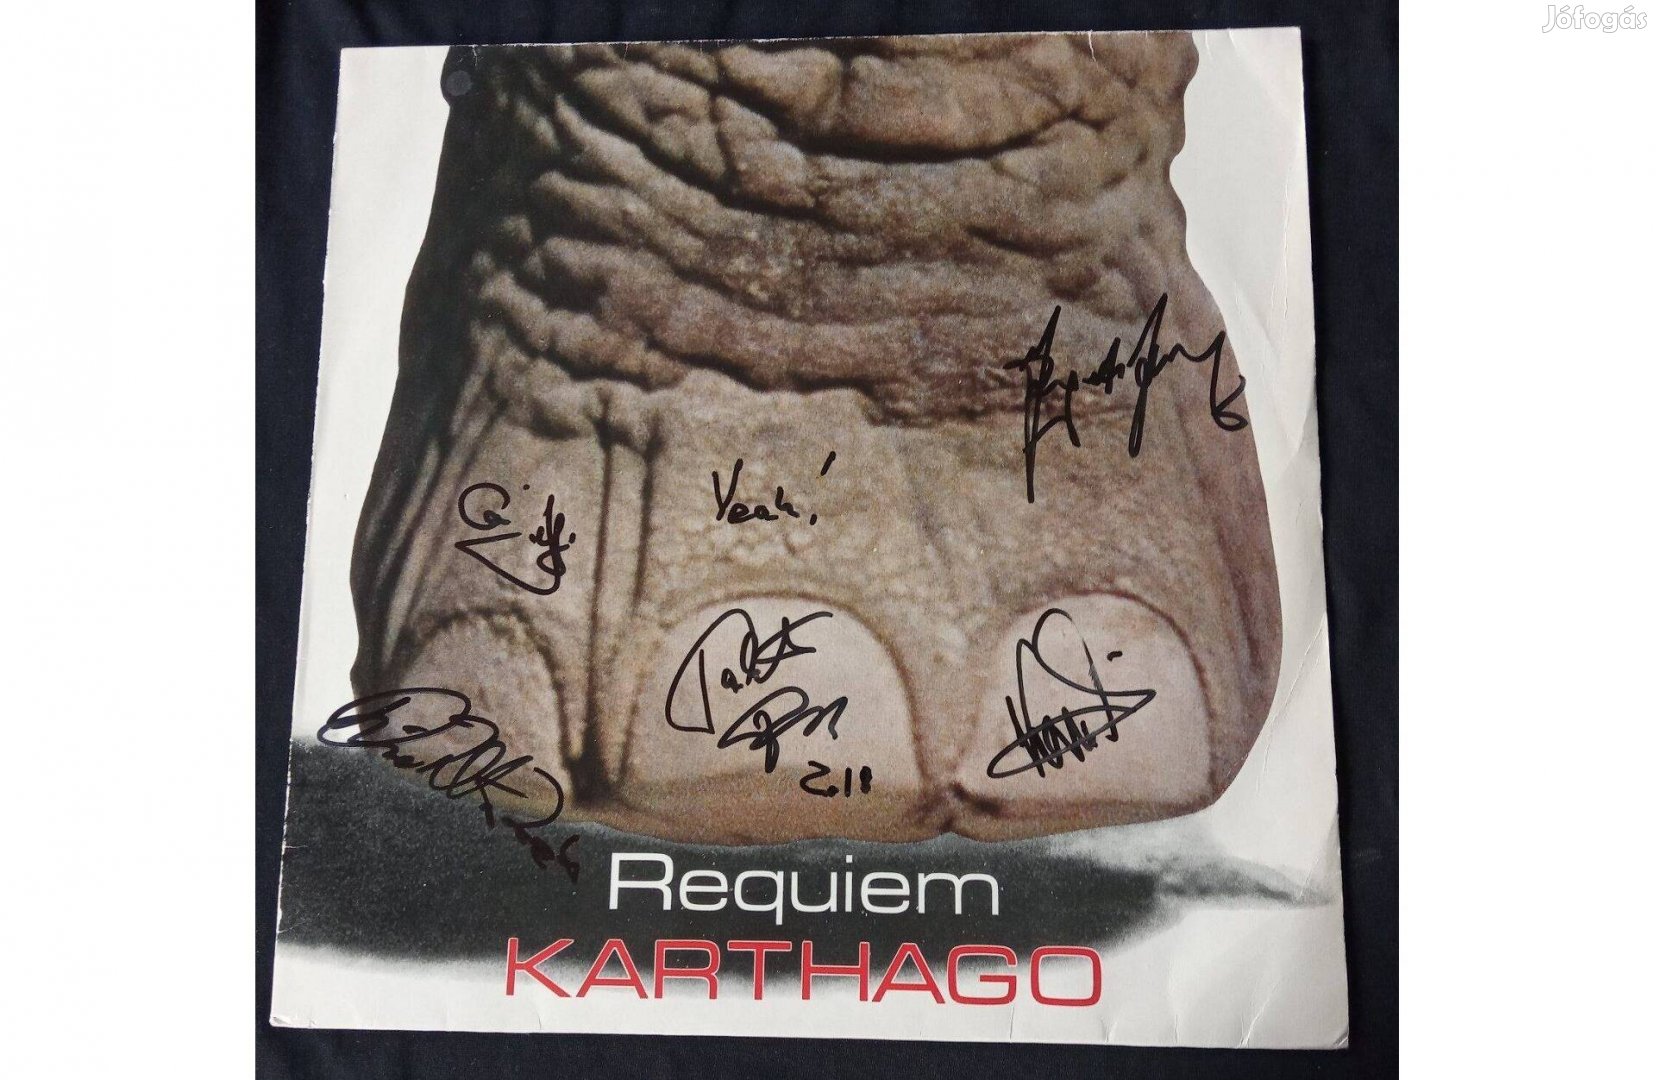 Karthago 1983 Requiem Austria hard rock Karcmentes bakelit dedikálva